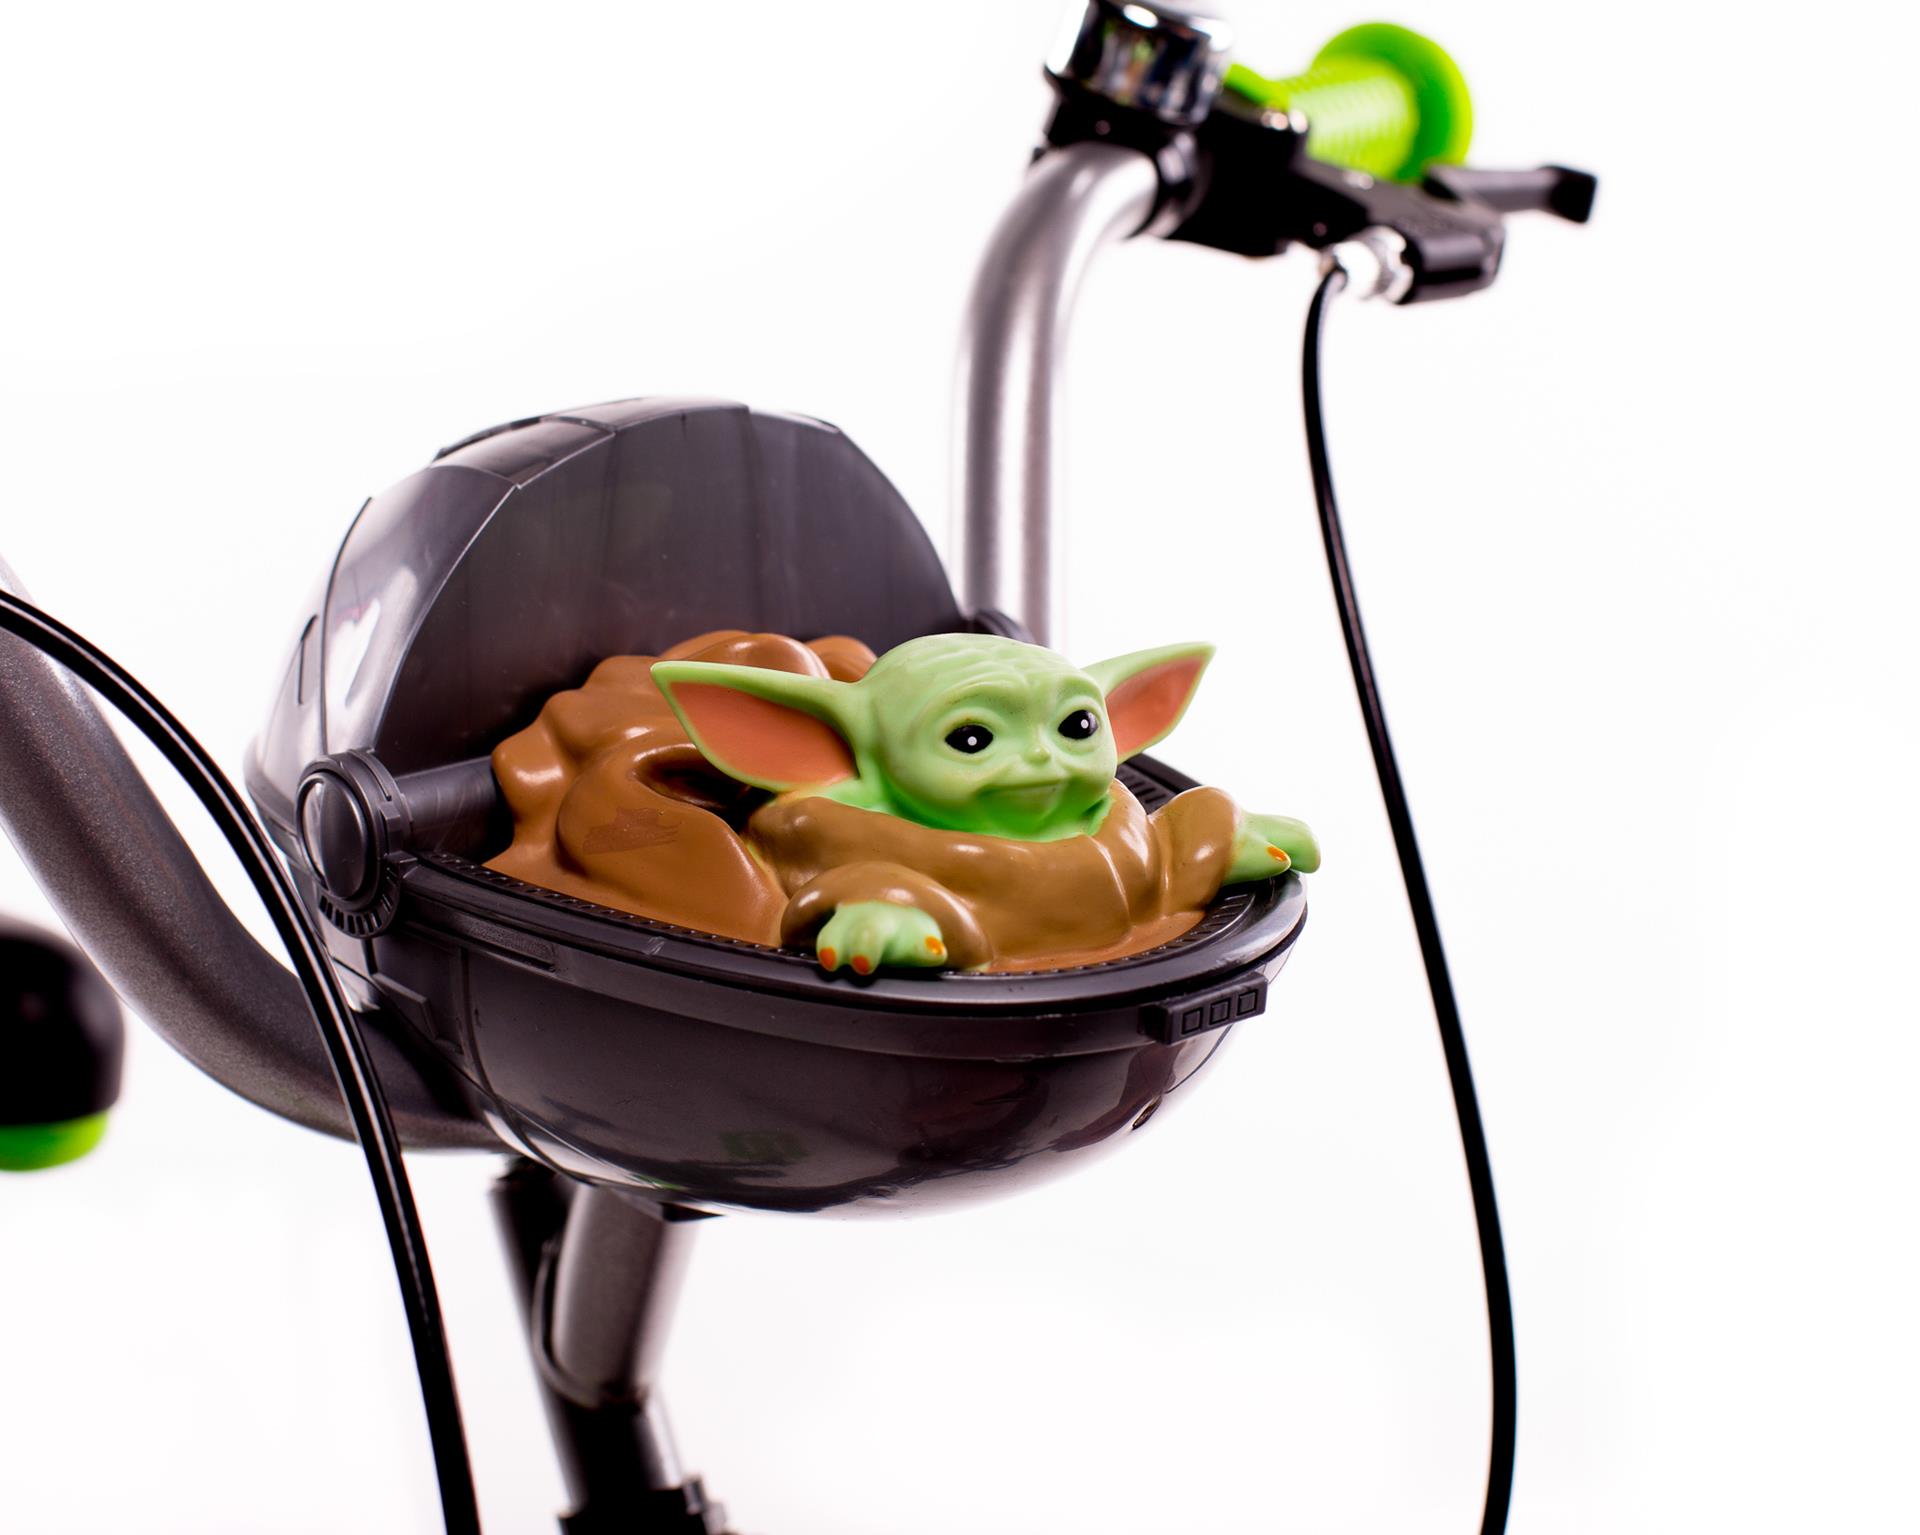 Huffy Star Wars 12" Vaikiškas dviratis